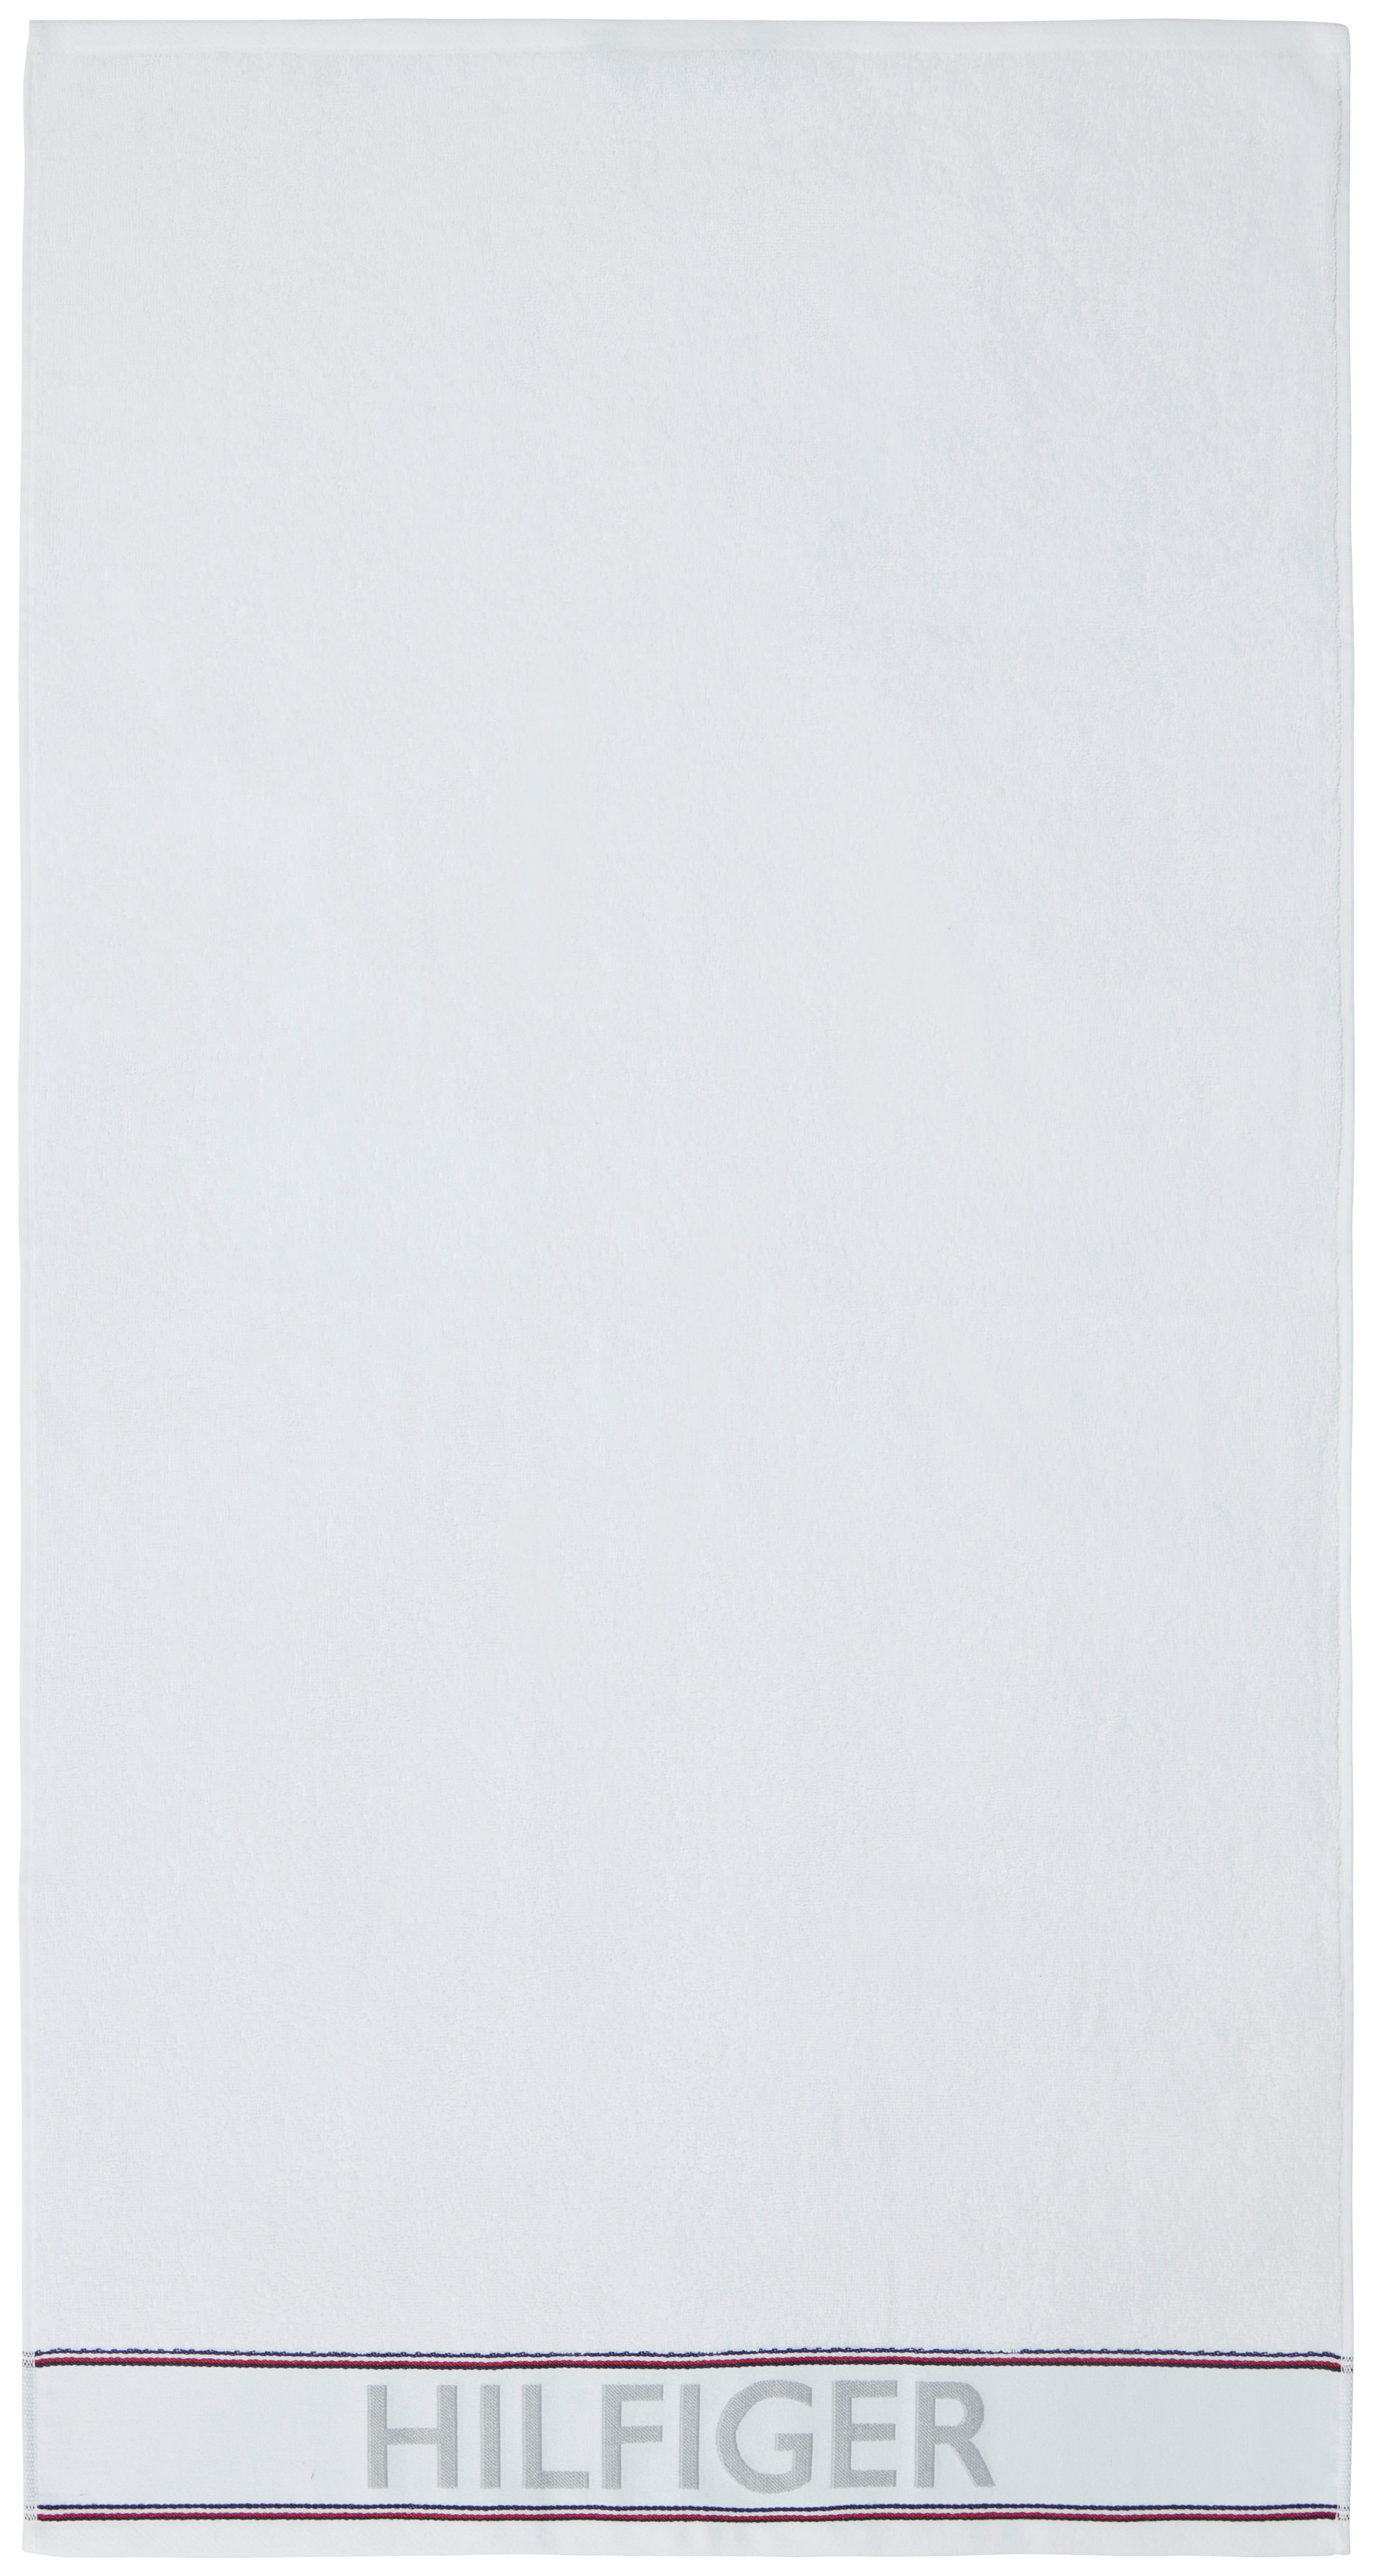 DUSCHTUCH Degree 70/130 cm  - Weiß, Basics, Textil (70/130cm) - Tommy Hilfiger